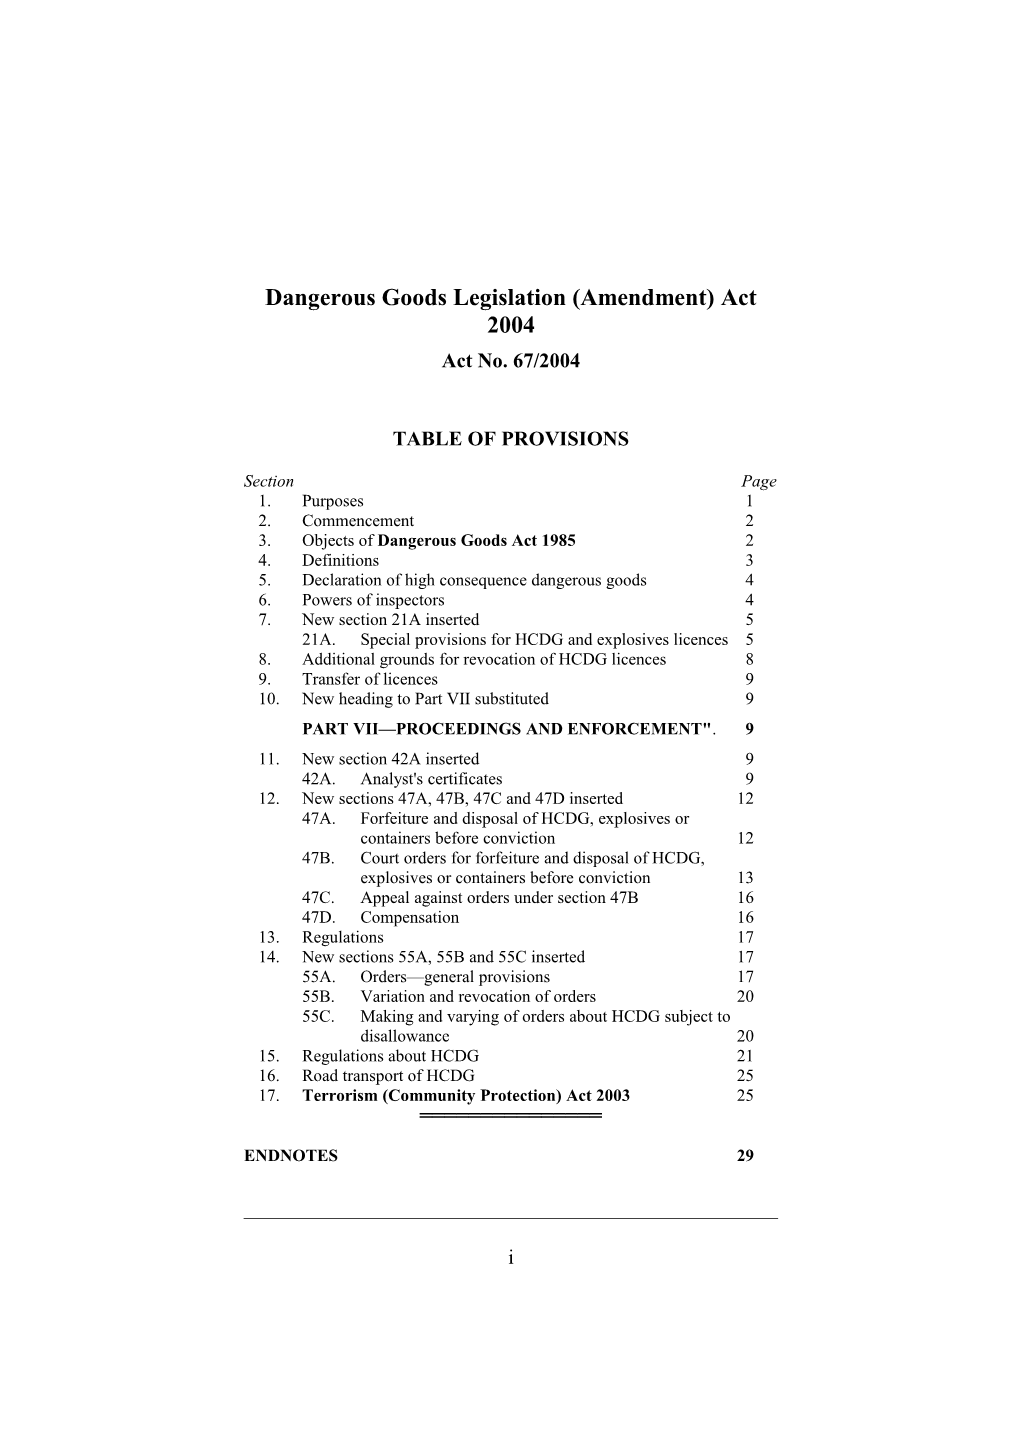 Dangerous Goods Legislation (Amendment) Act 2004